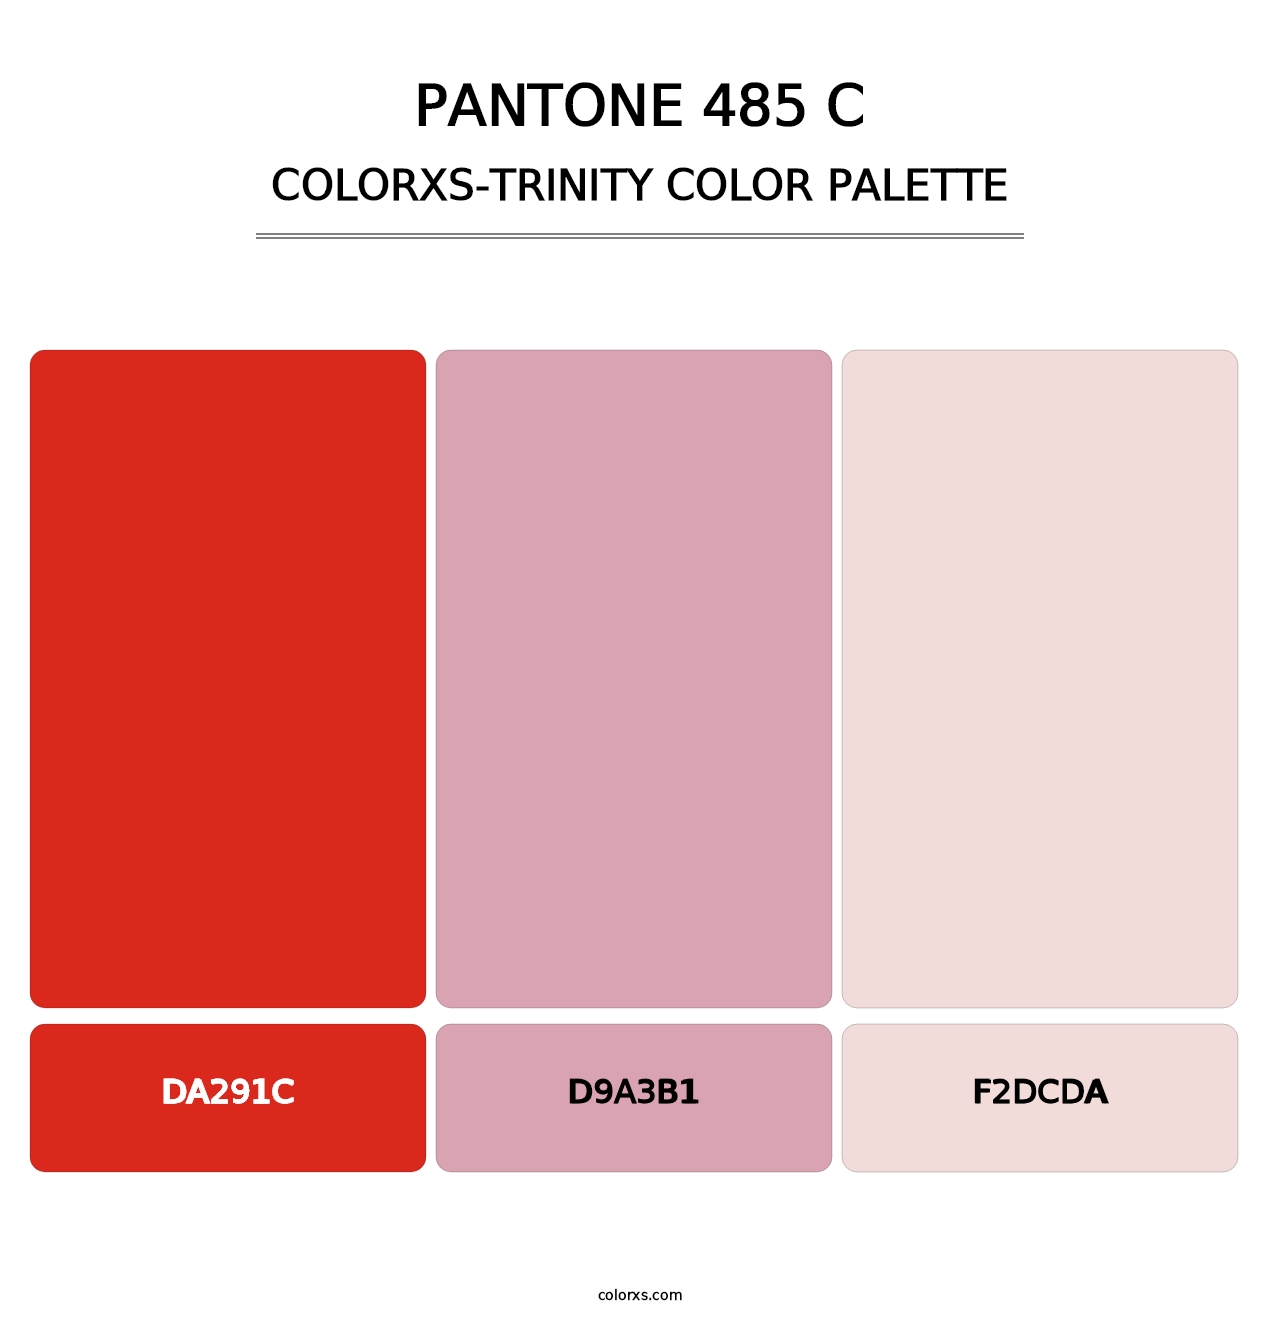 PANTONE 485 C - Colorxs Trinity Palette